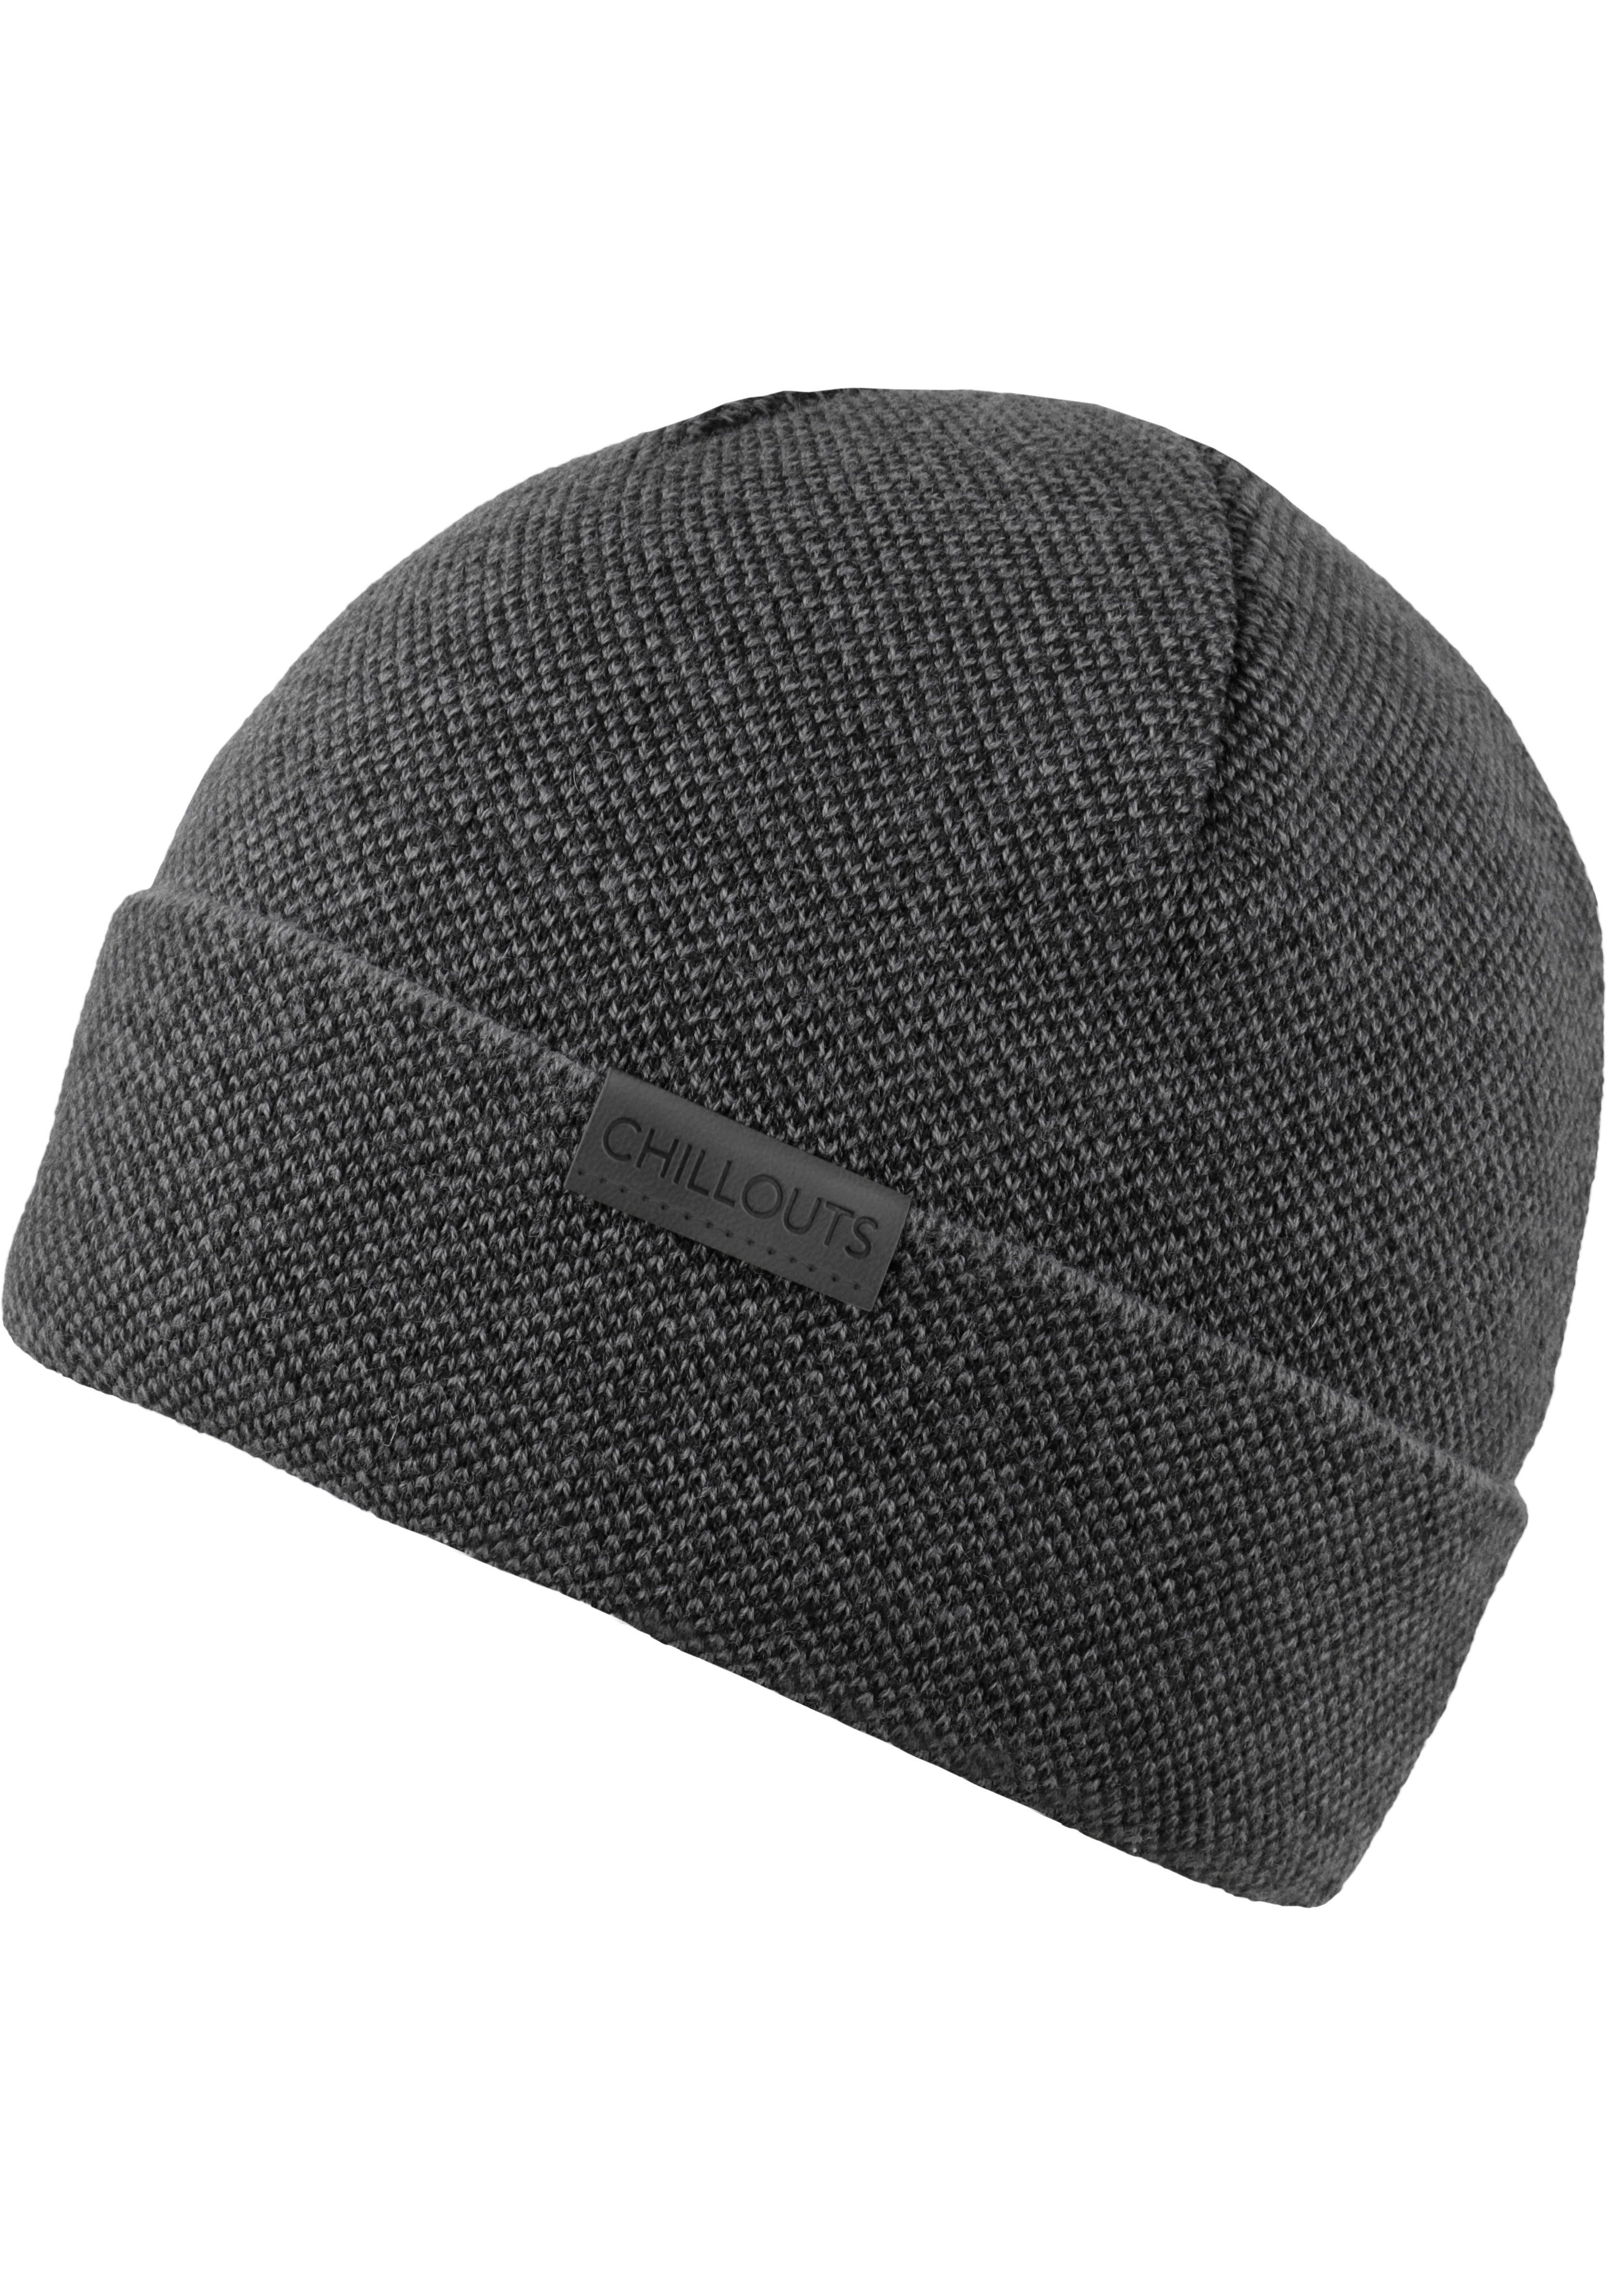 dark Hat Kilian grey chillouts Strickmütze